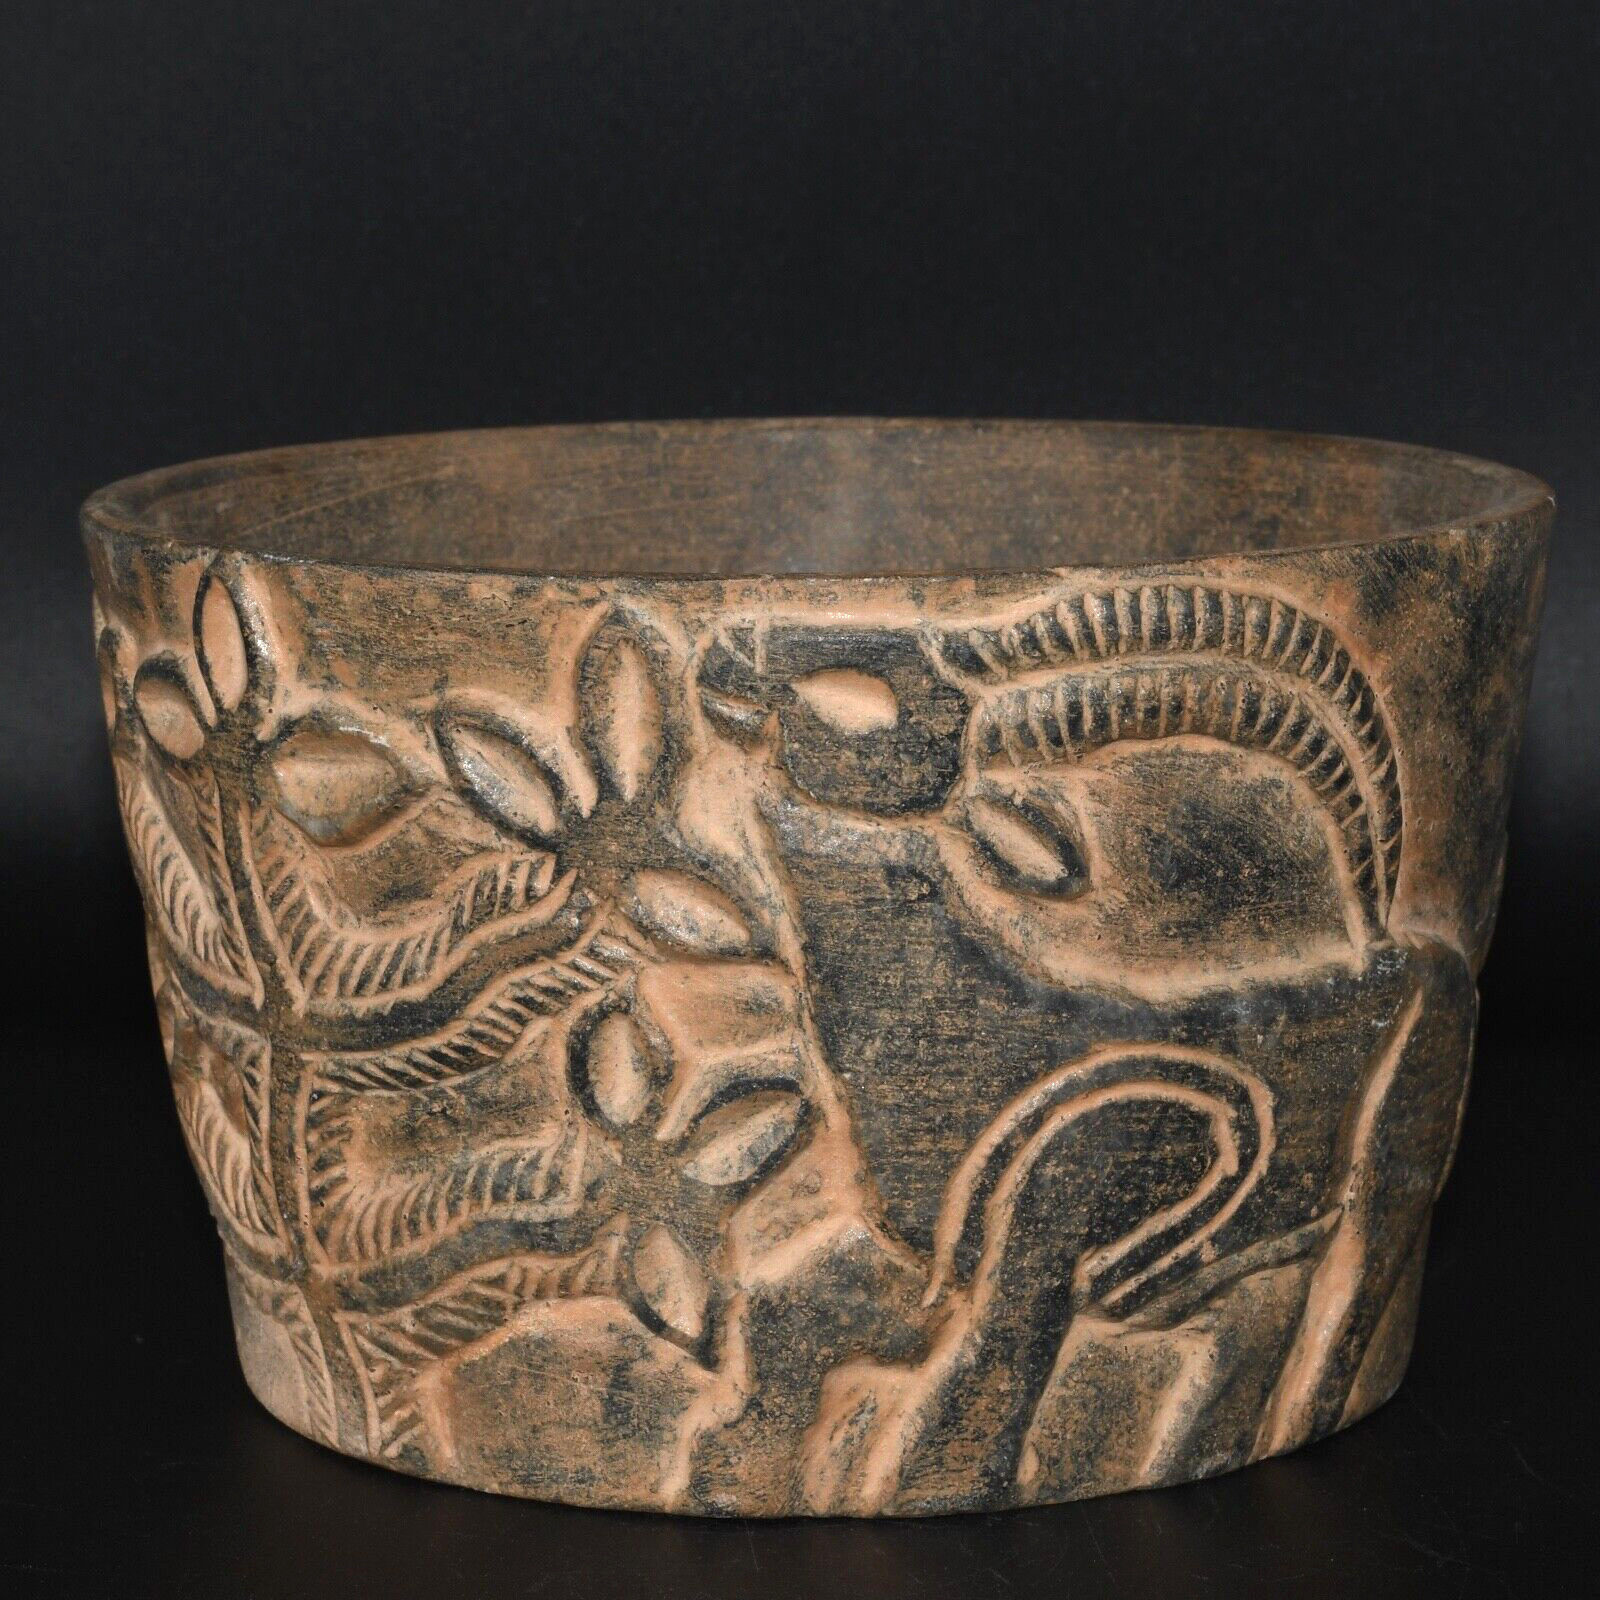 Intact Rare Ancient Jiroft Civilization Stone Jar Depicting Multiple Figurines